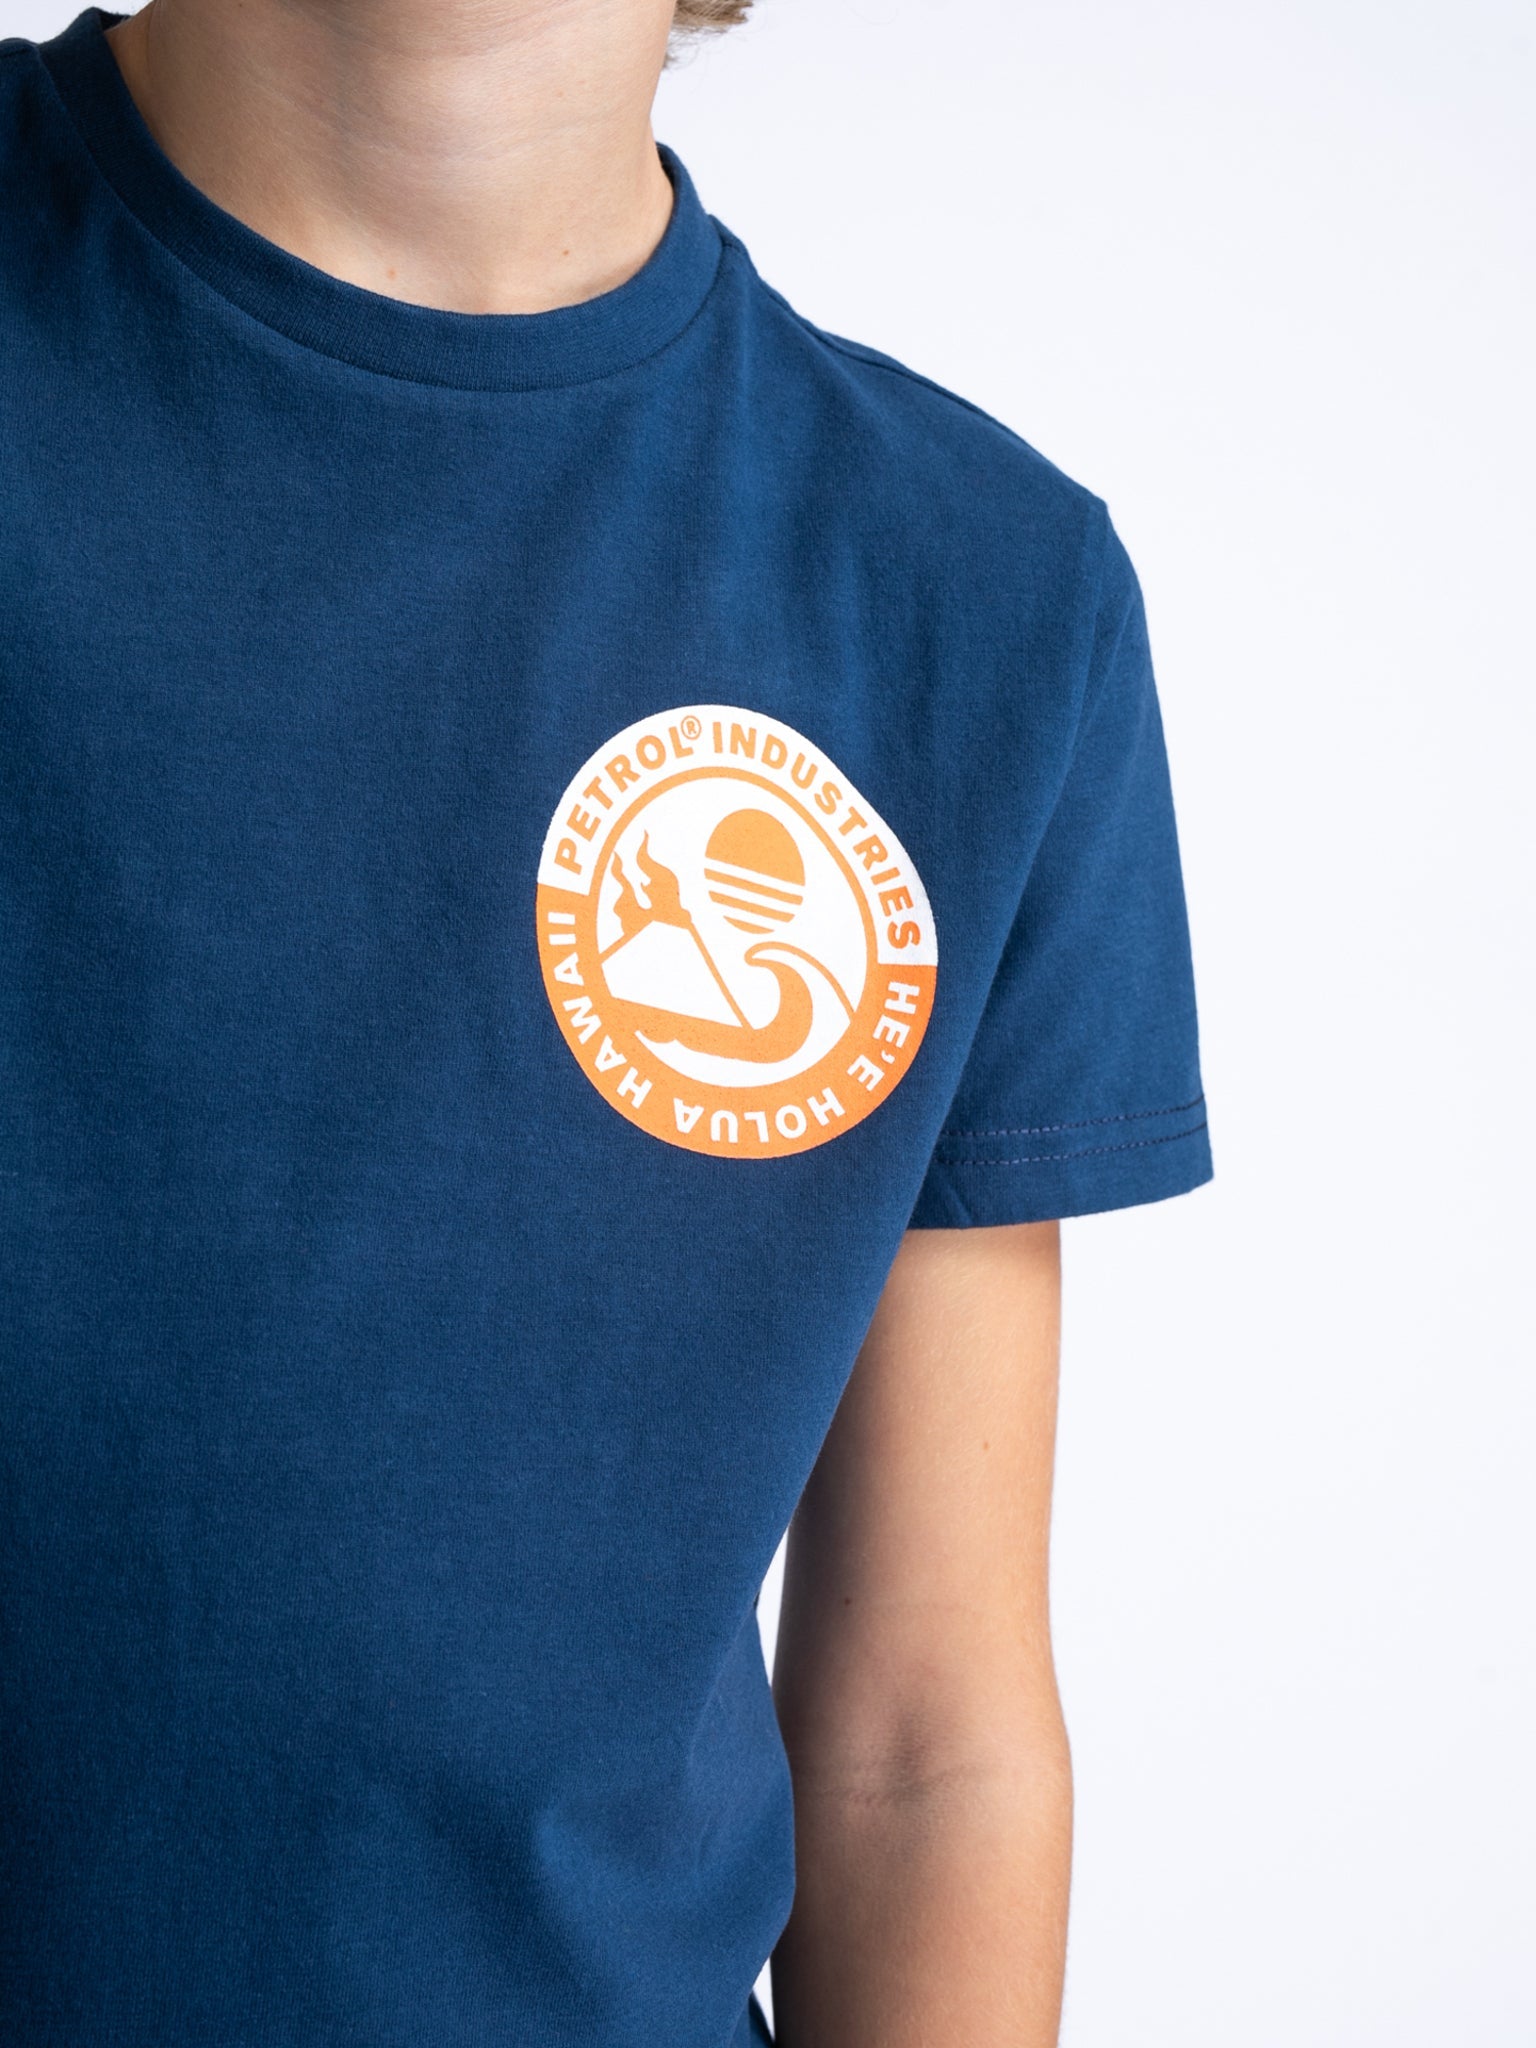 Jongens Boys T-Shirt SS Classic Print van Petrol in de kleur Petrol Blue in maat 176.